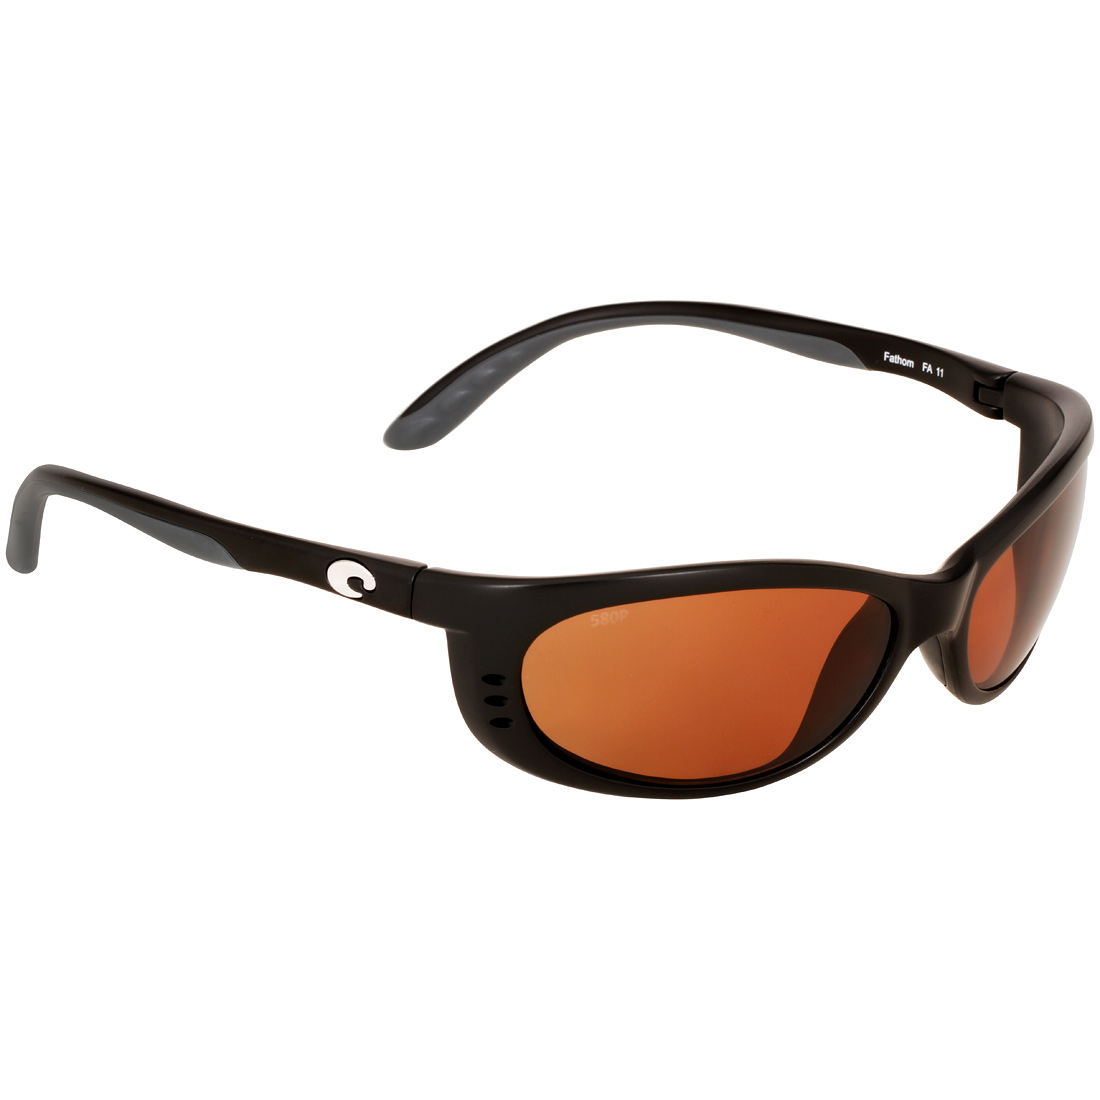 Costa Fathom Matte Black Plastic Frame Copper Lens Men's Sunglasses FA11OCP - image 2 of 4